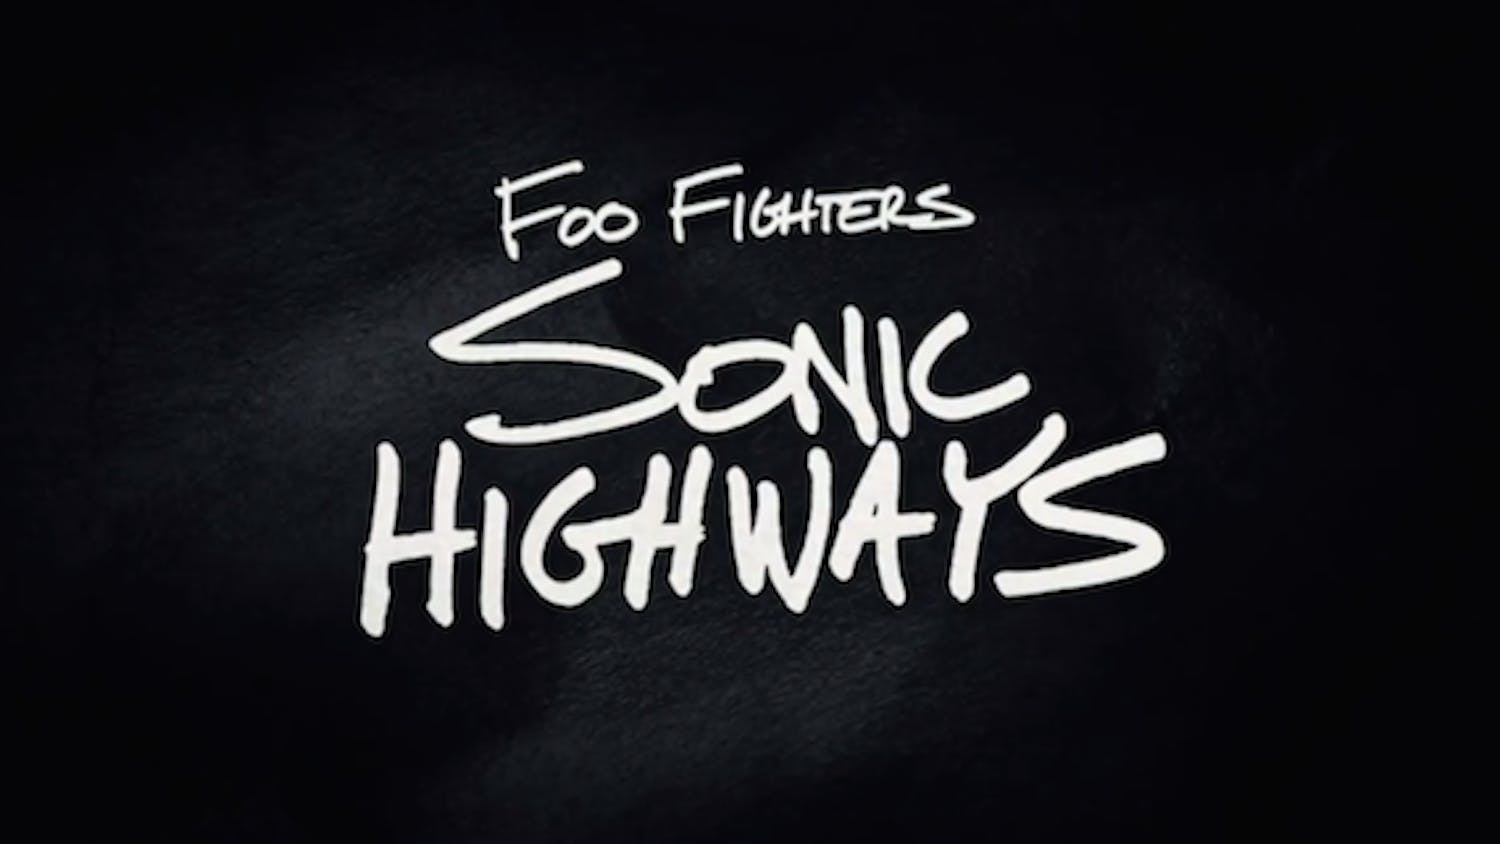 foo-fighters-sonic-highways-2